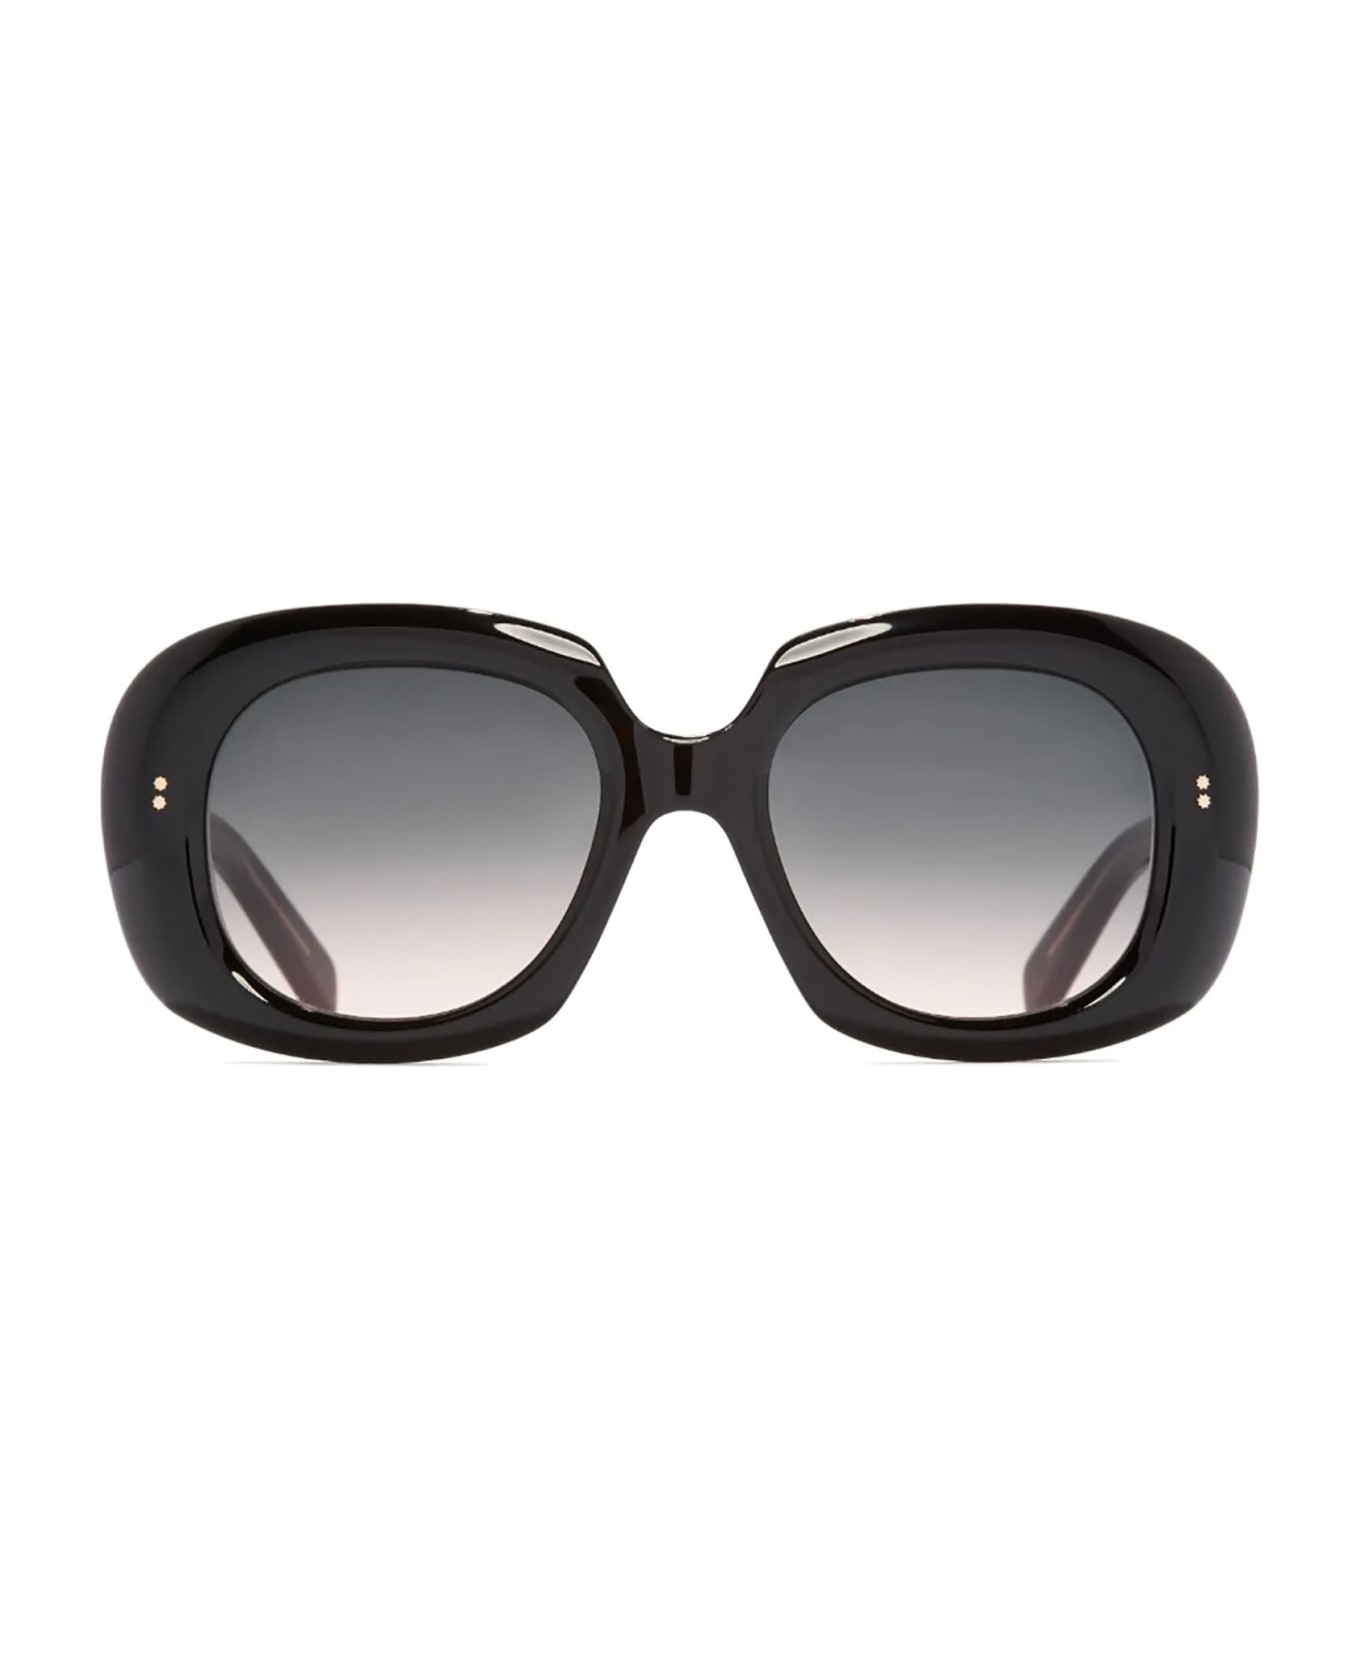 Cutler and Gross 9383 Sunglasses - Black